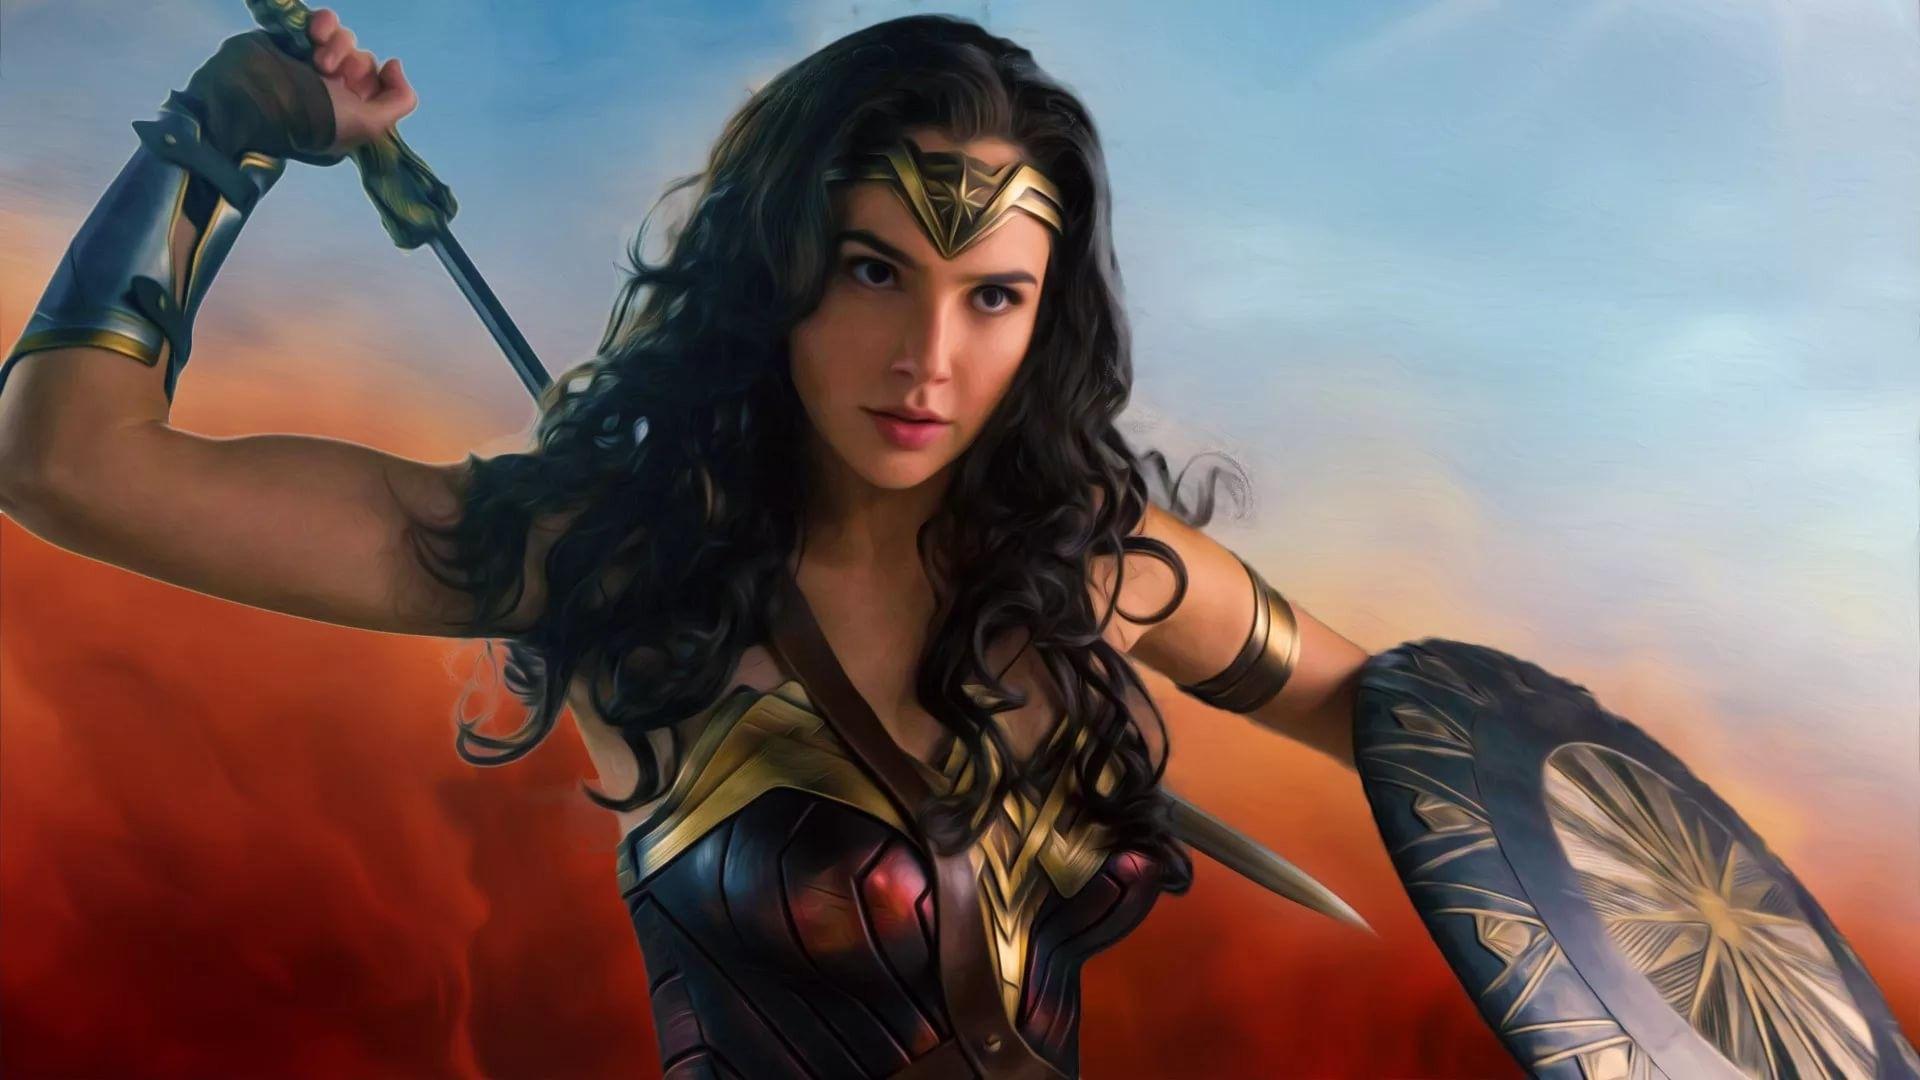 Wonder Woman HD Wallpapers - Top Free Wonder Woman HD Backgrounds ...